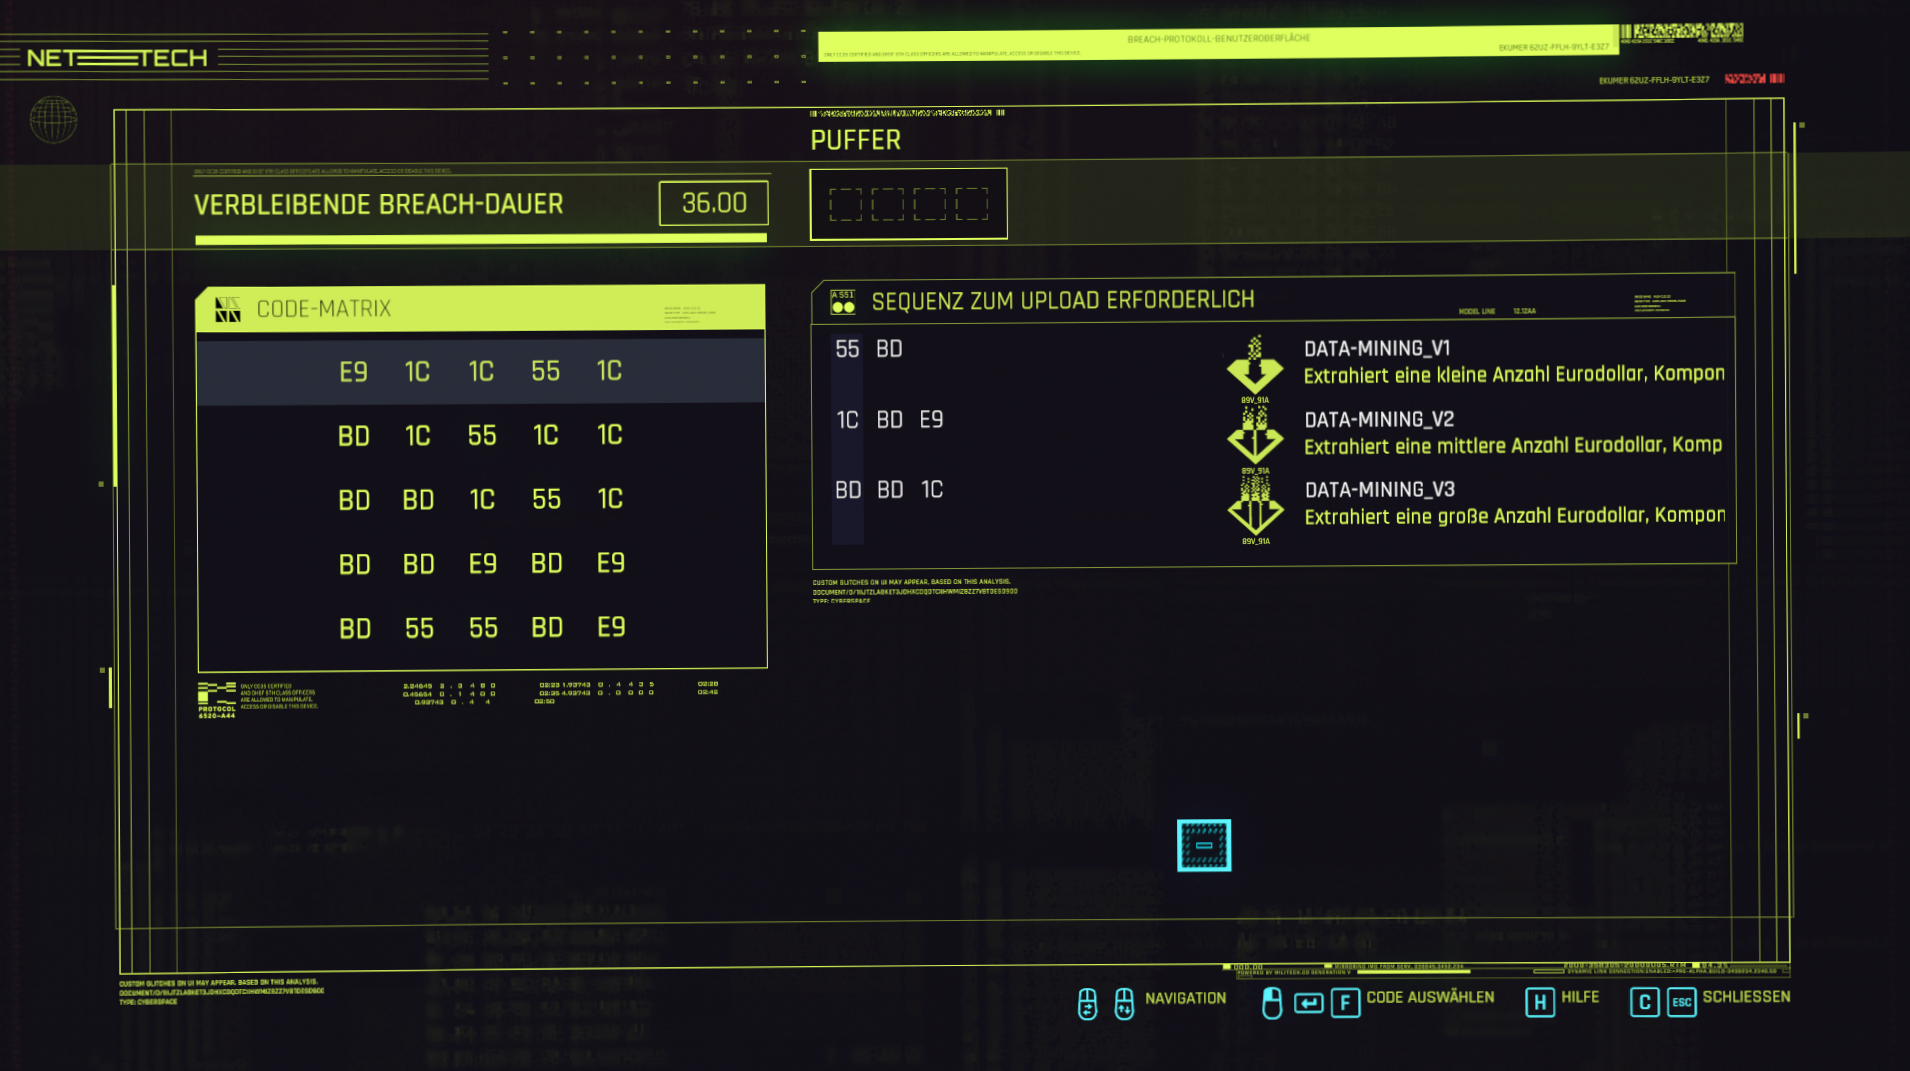 Cyberpunk 2077 - Hacking via Breach-Protokoll